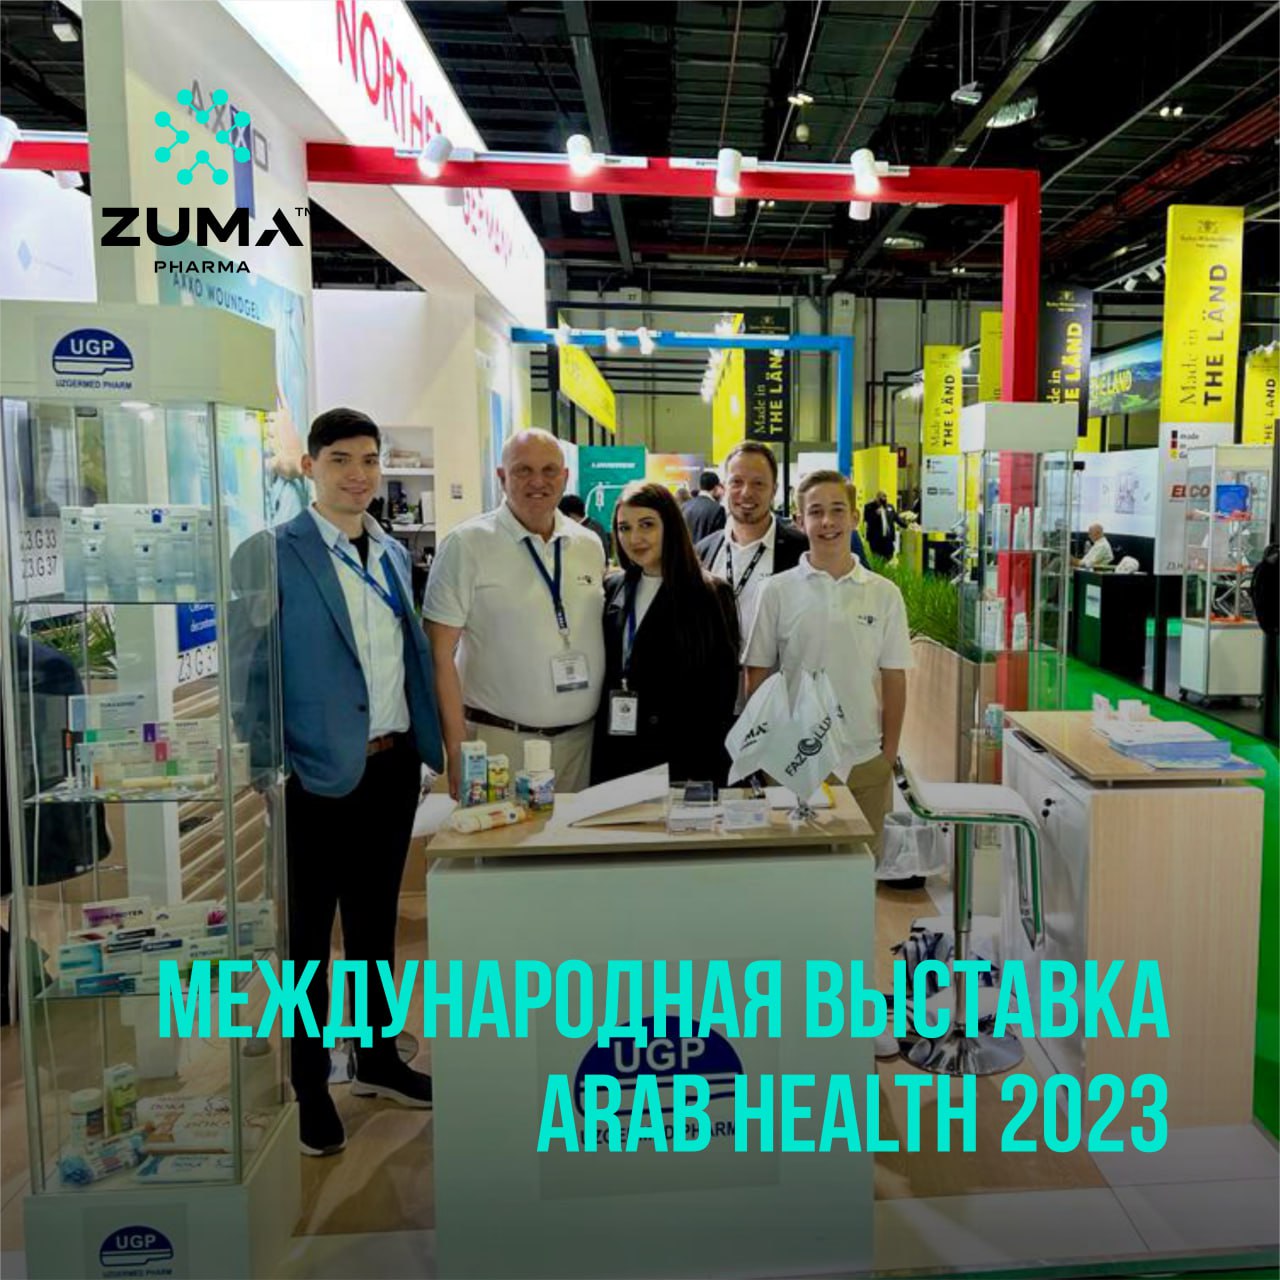 ARAB HEALTH 2023